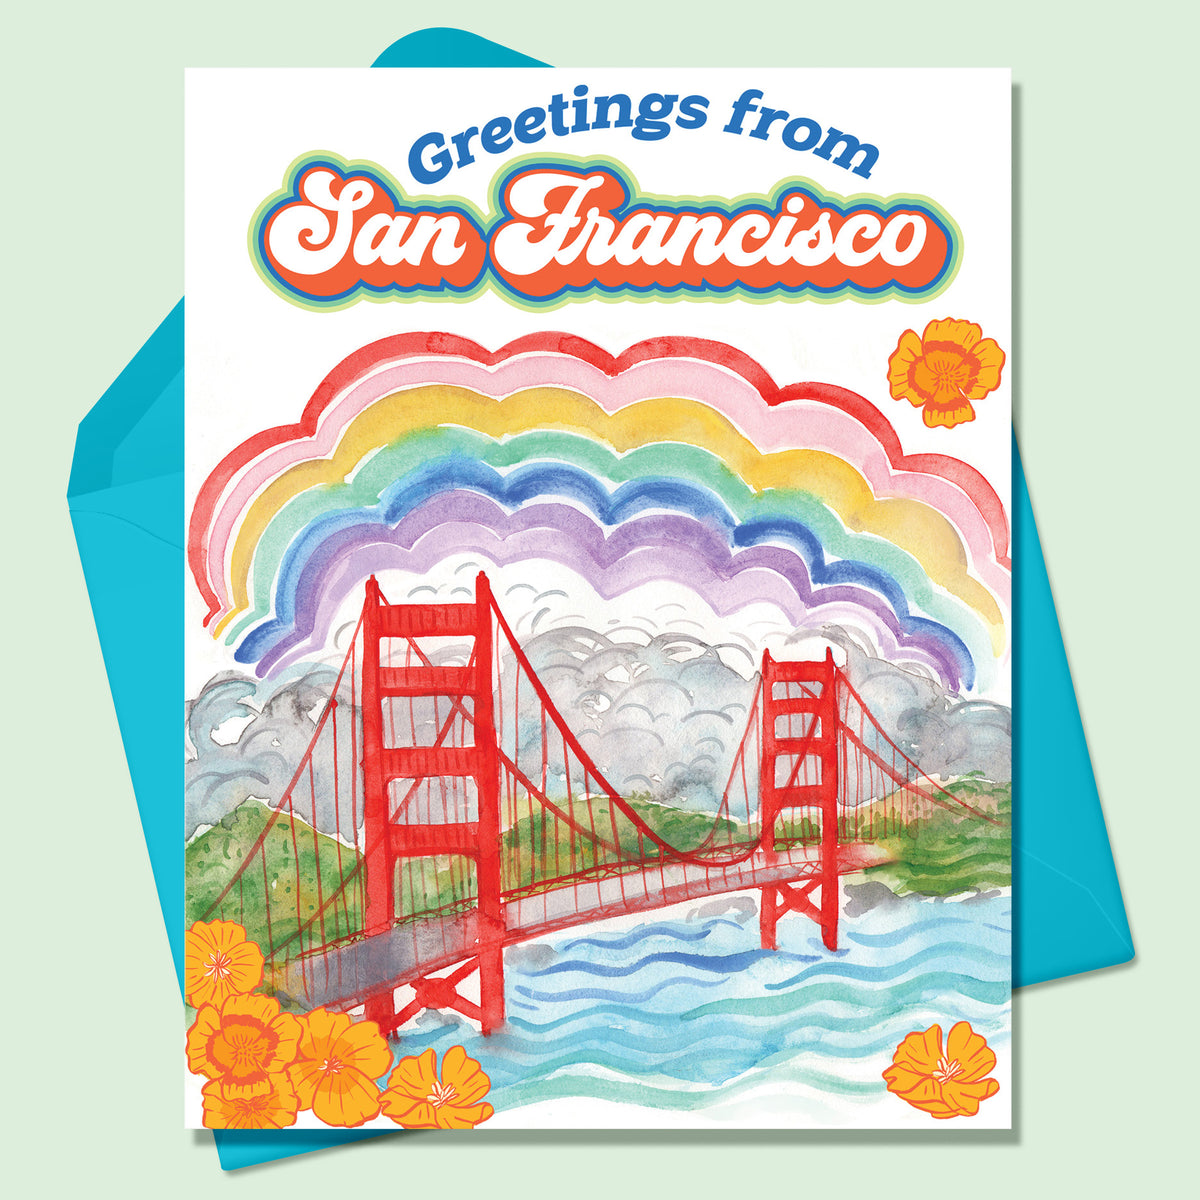 Greetings from San Francisco Greeting Card